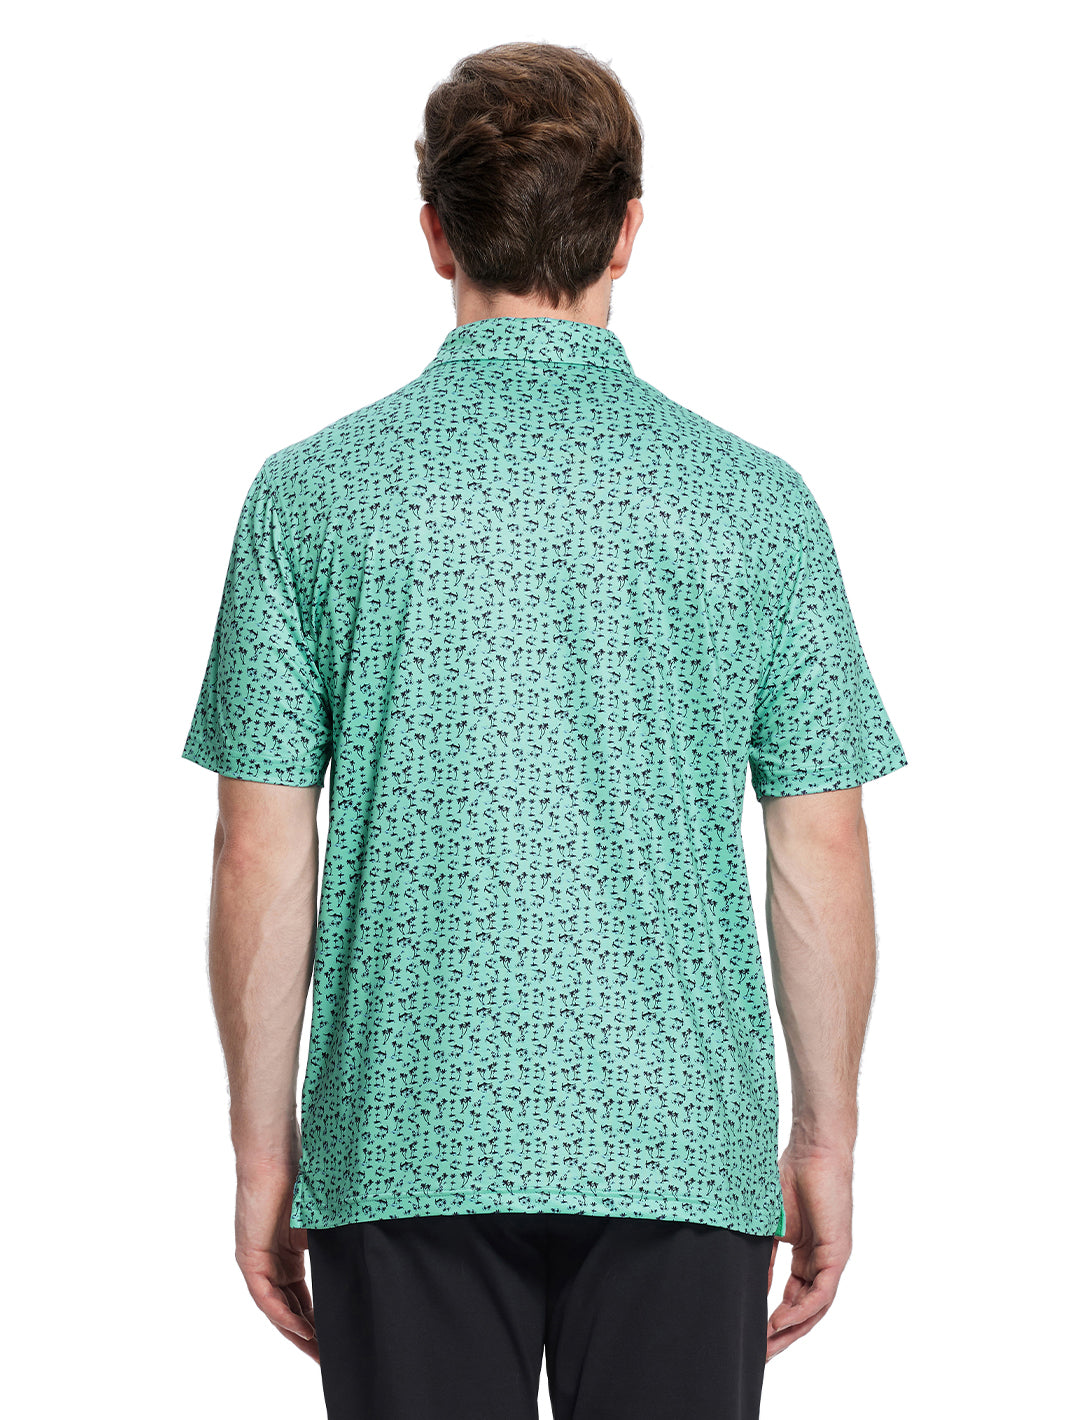 Men's Printed Golf Shirts-Mint Seaside Palm